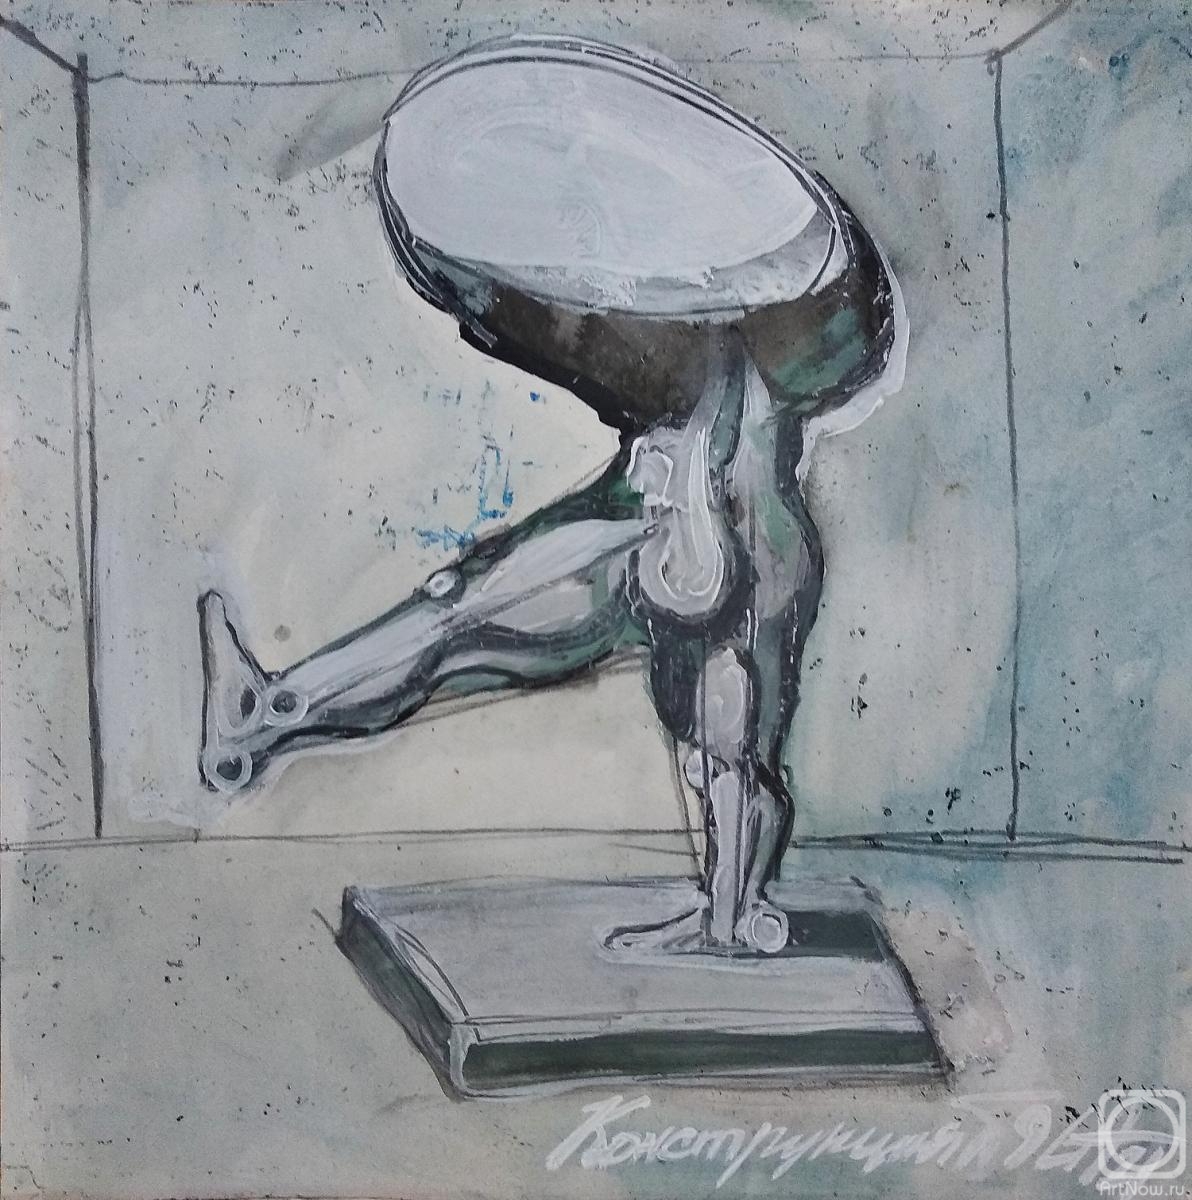 Lechkin Aleksandr. Sketch for the sculpture "Moving forward"